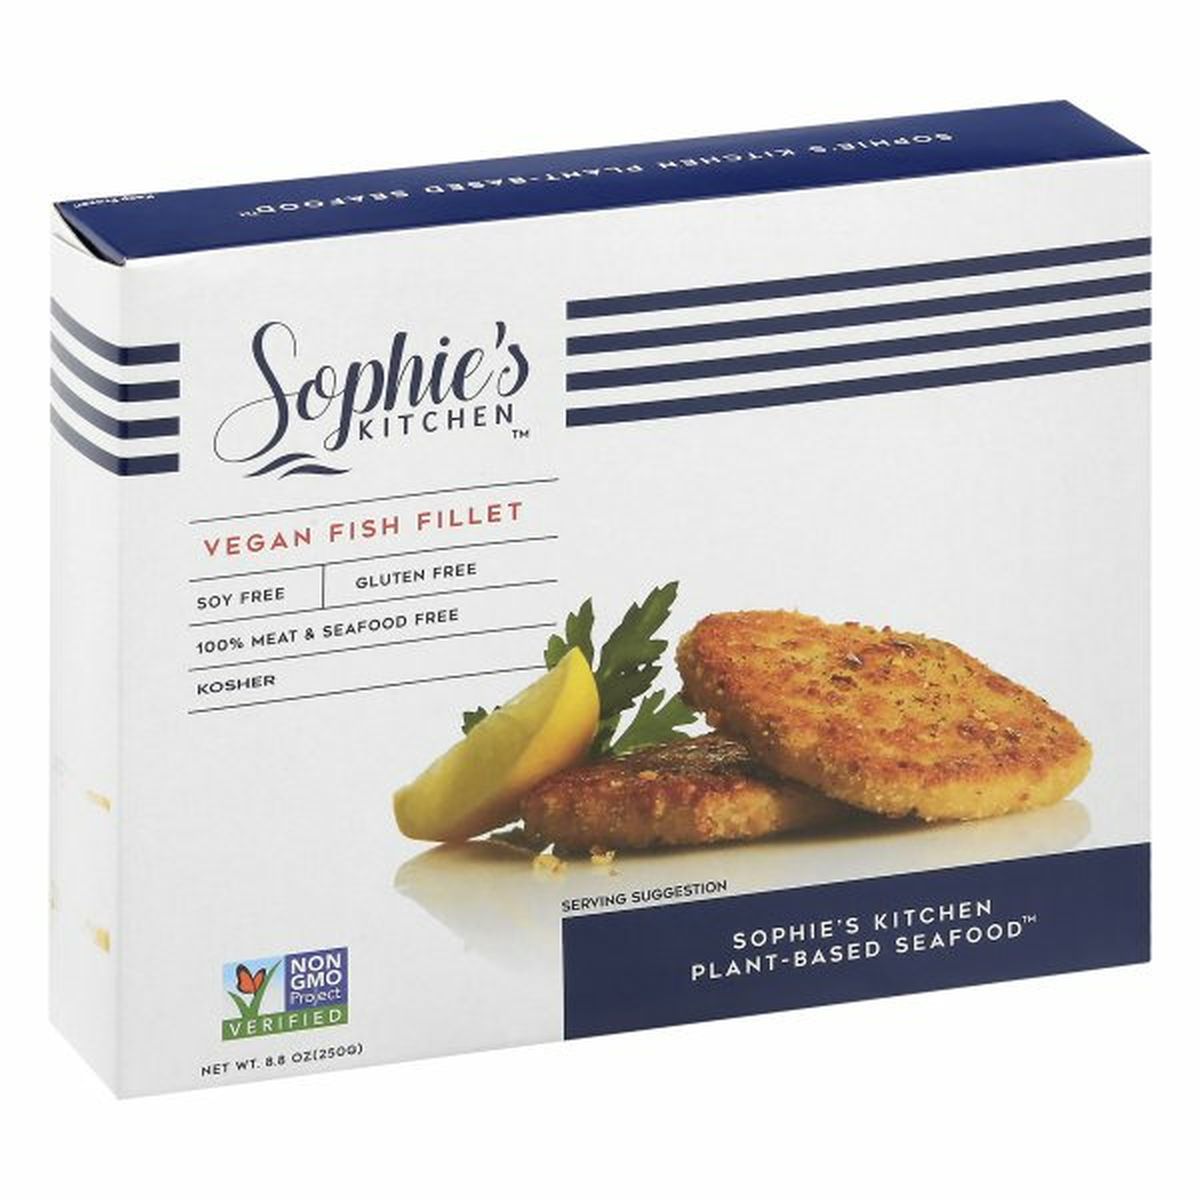 Calories in Sophie's Kitchen Fish Fillet, Vegan